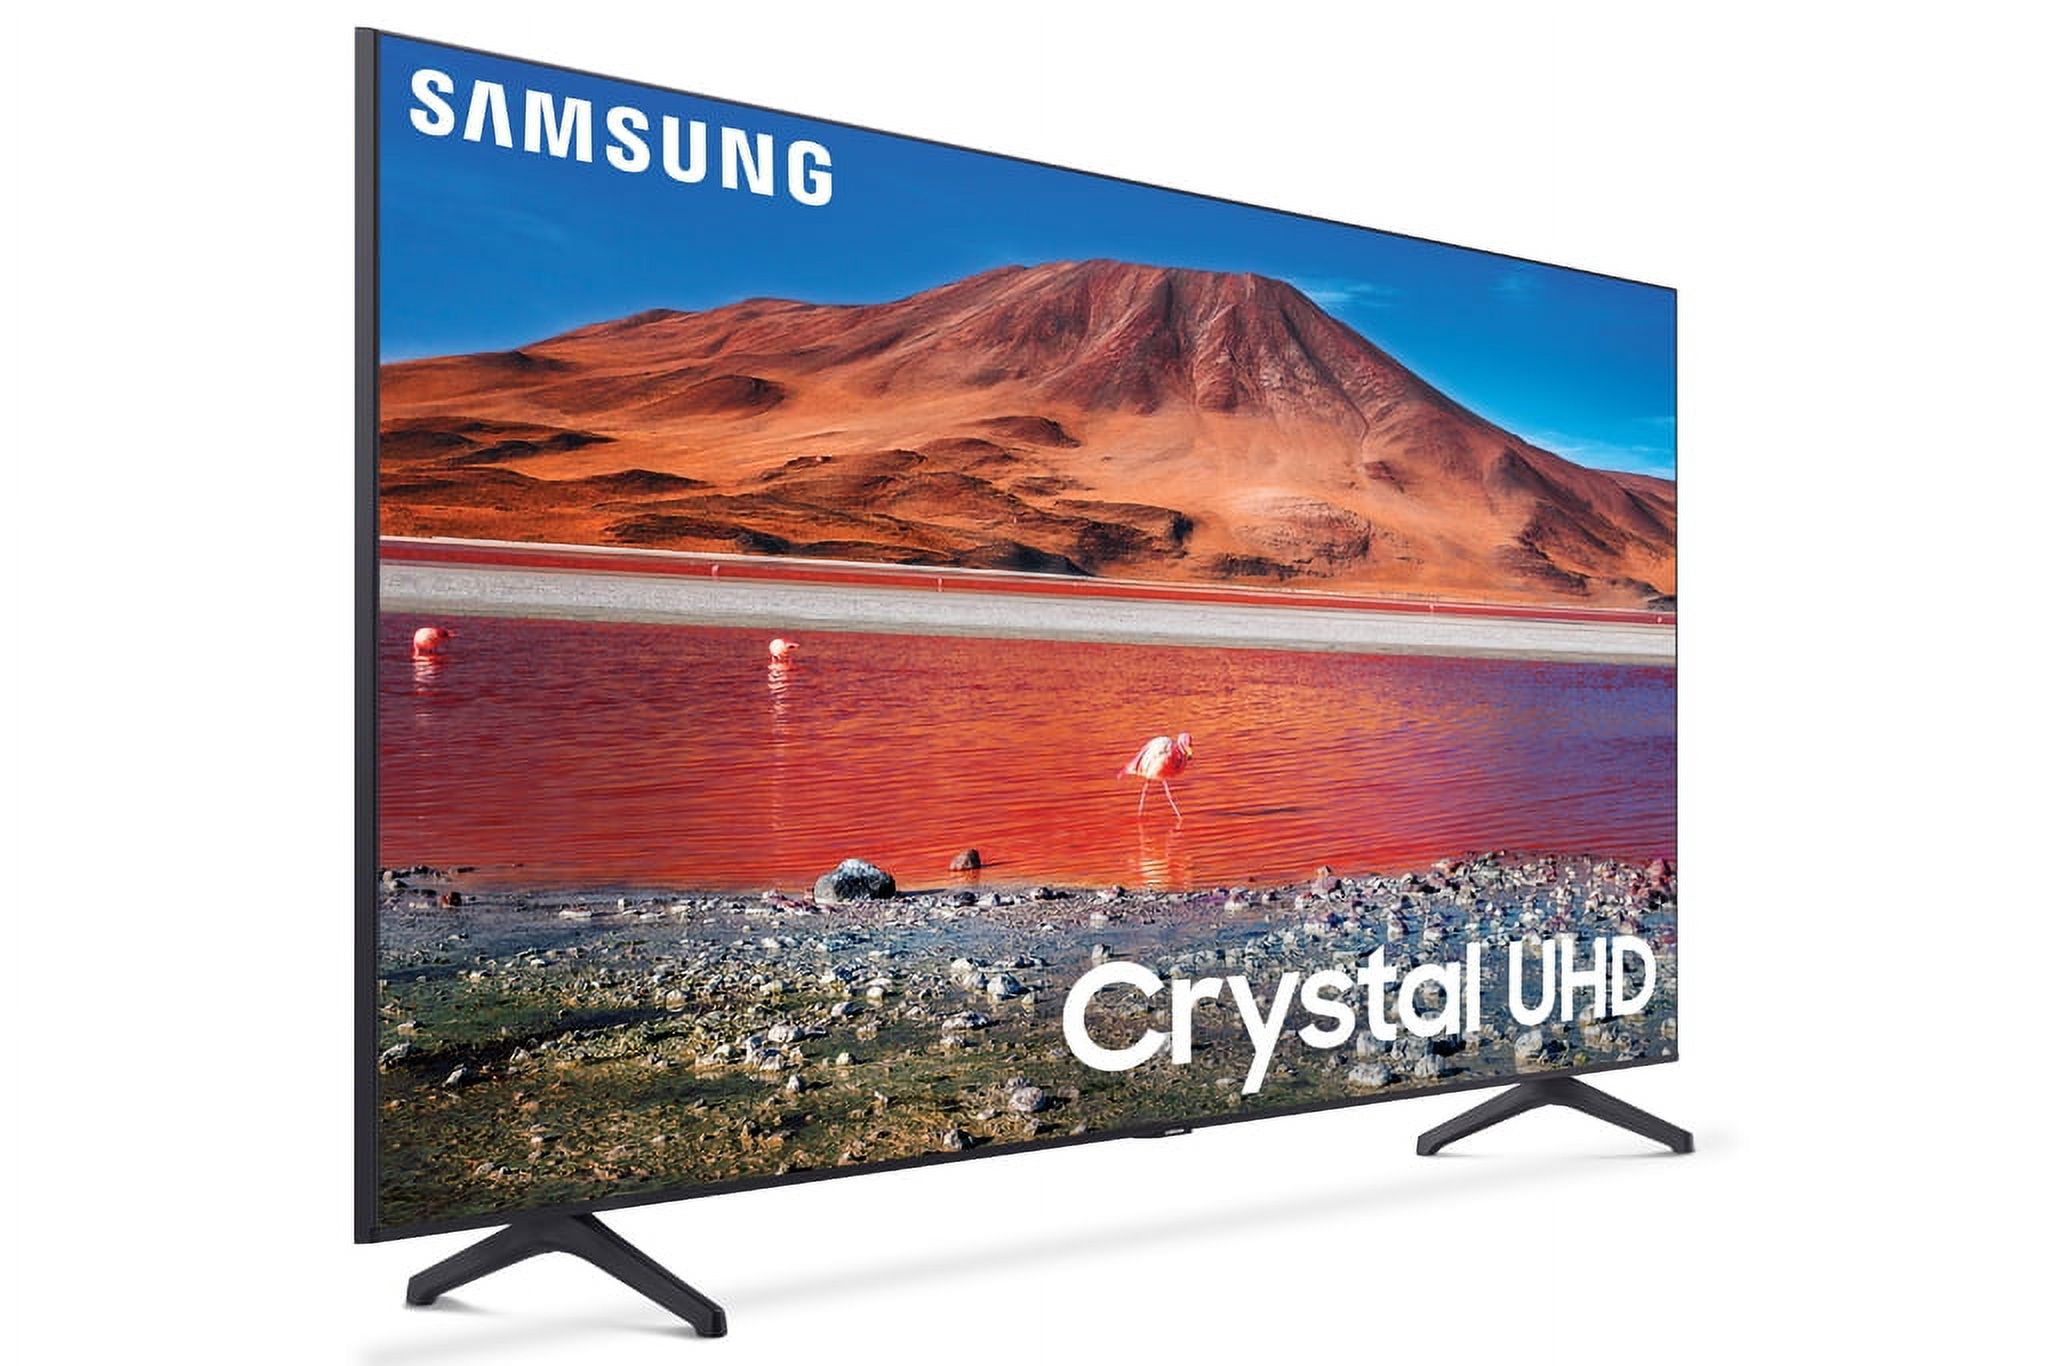 SAMSUNG 65" Class 4K Crystal UHD (2160P) LED Smart TV with HDR UN65TU7000B - image 4 of 5